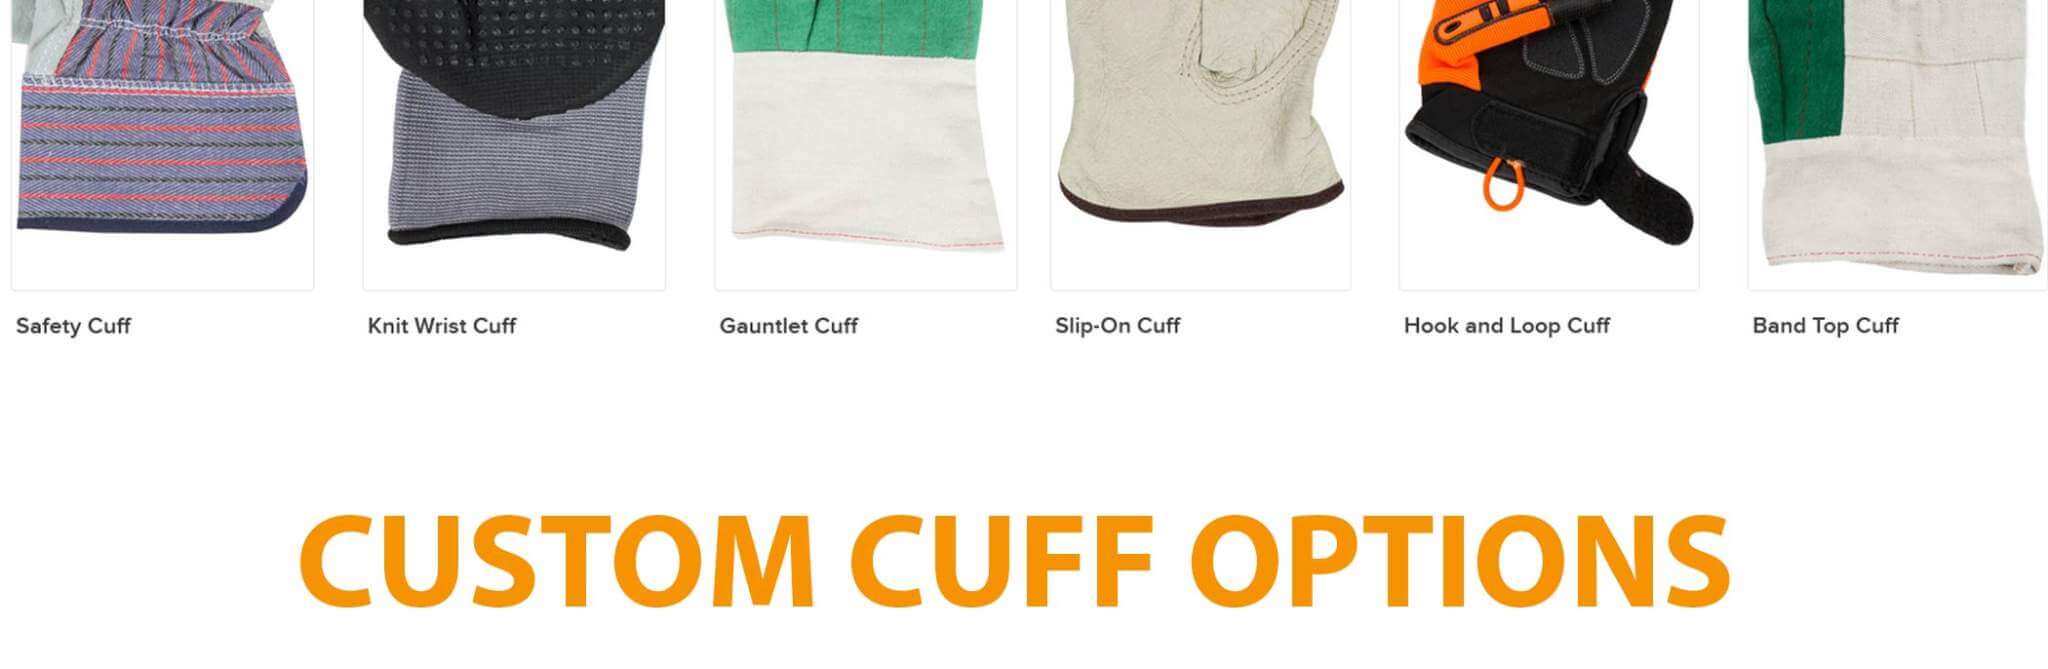 cuff-options